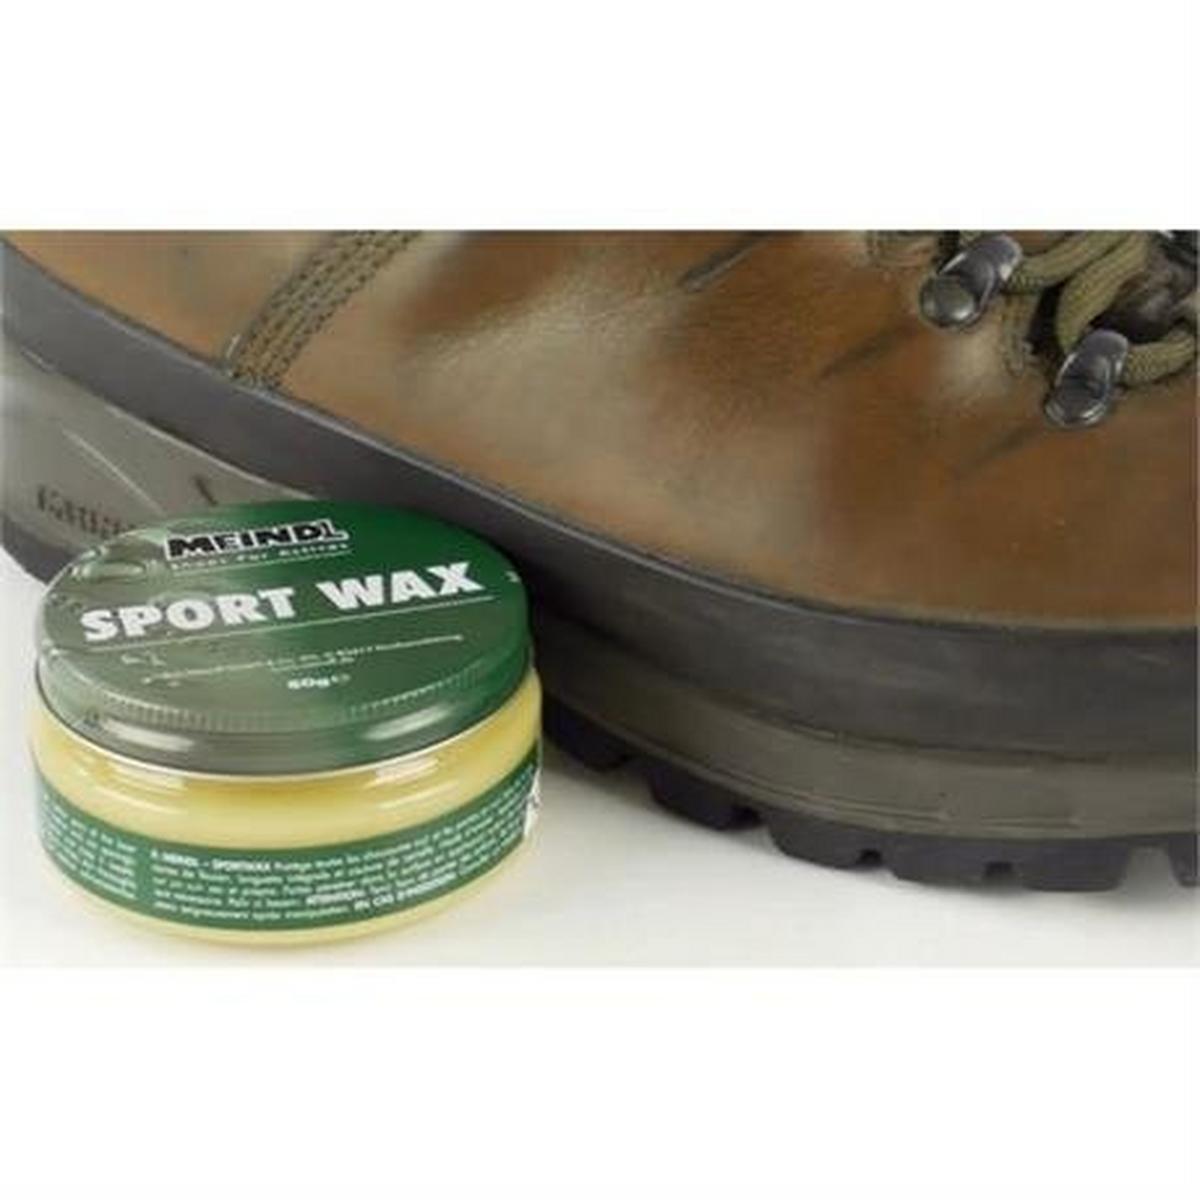 Meindl Shoe & Boot Care Sportwax